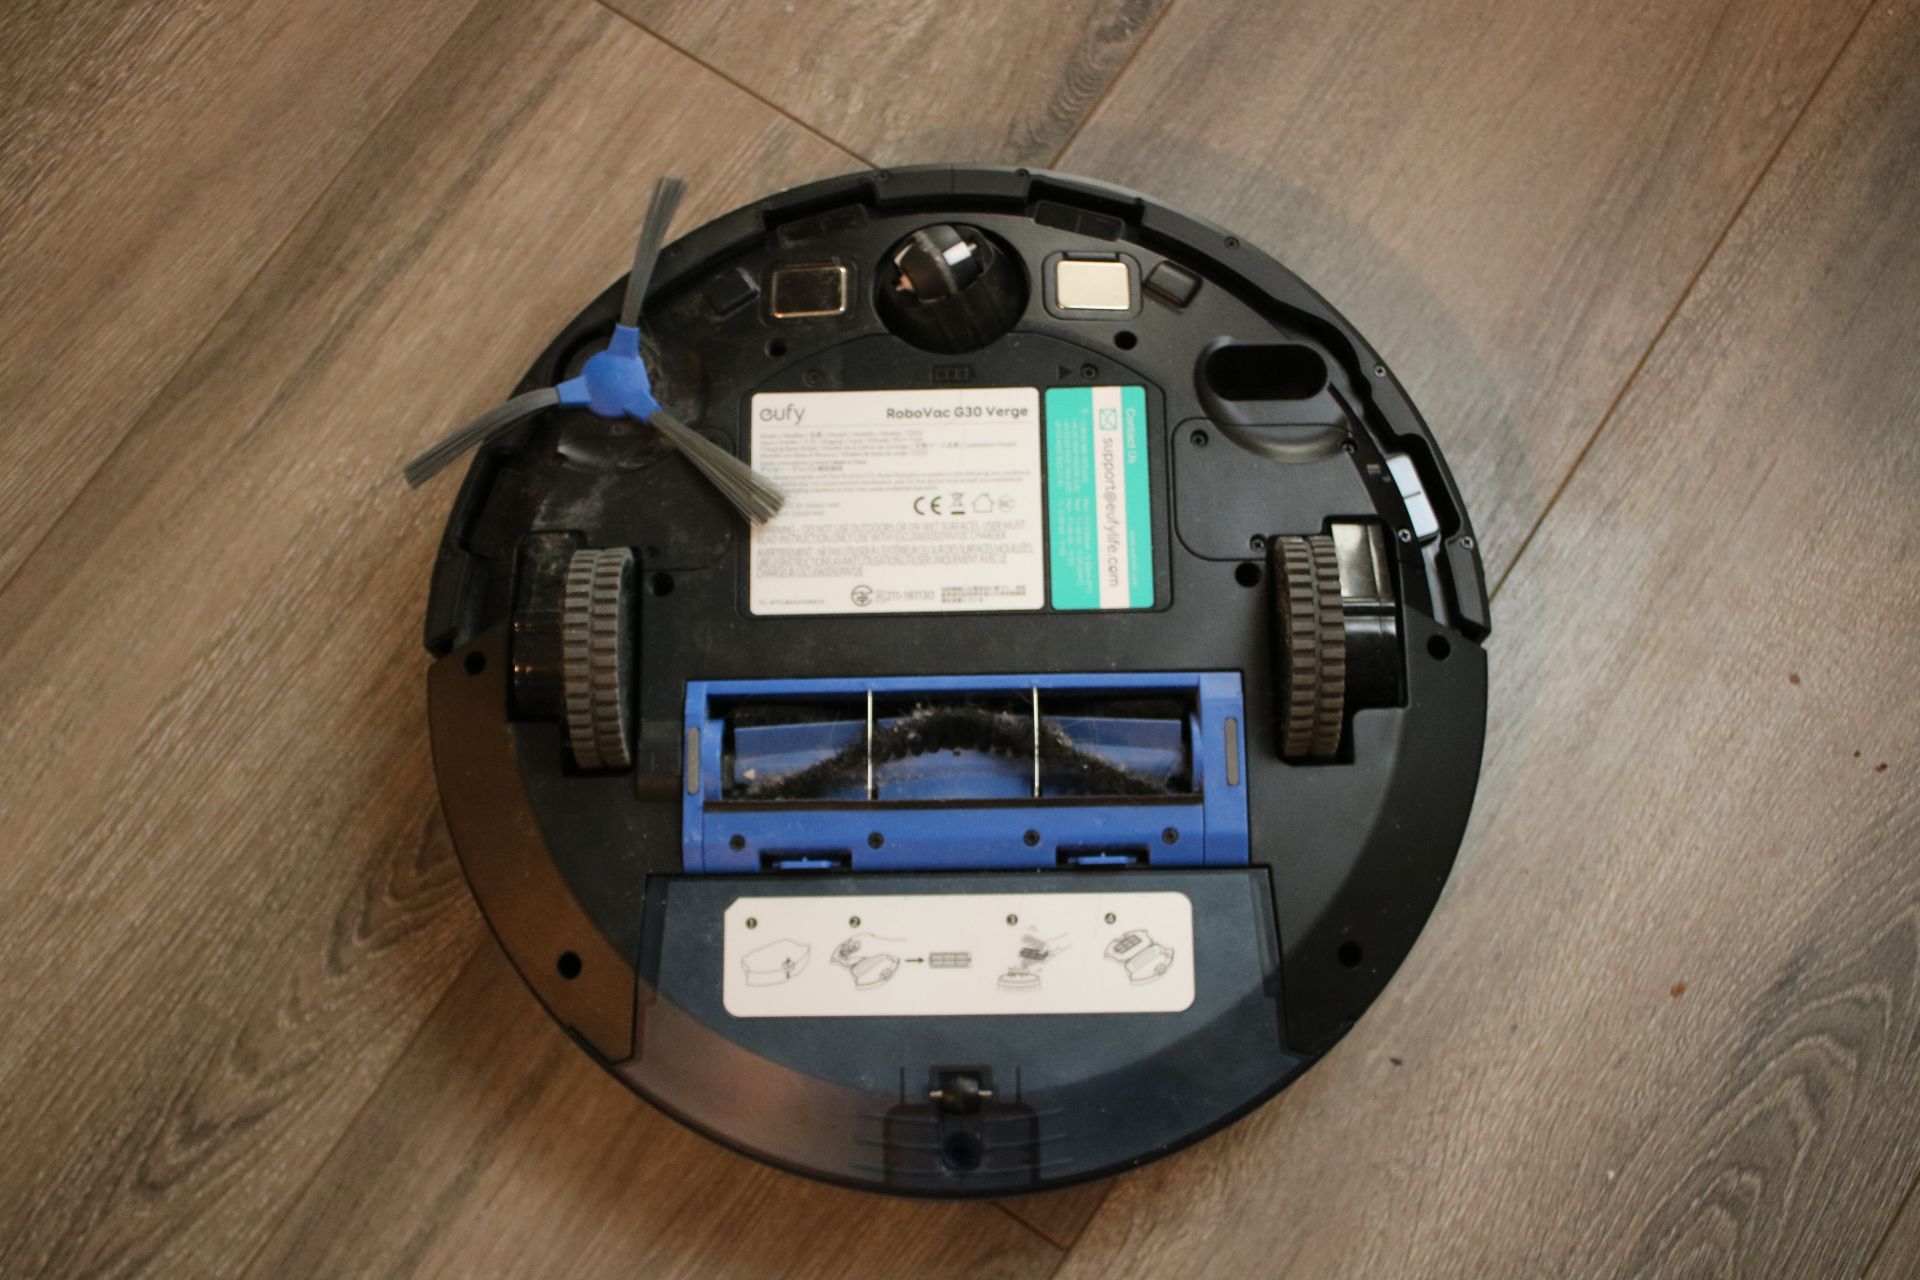 Brosses de l'aspirateur robot RoboVac G30 Verge d’eufy by Anker